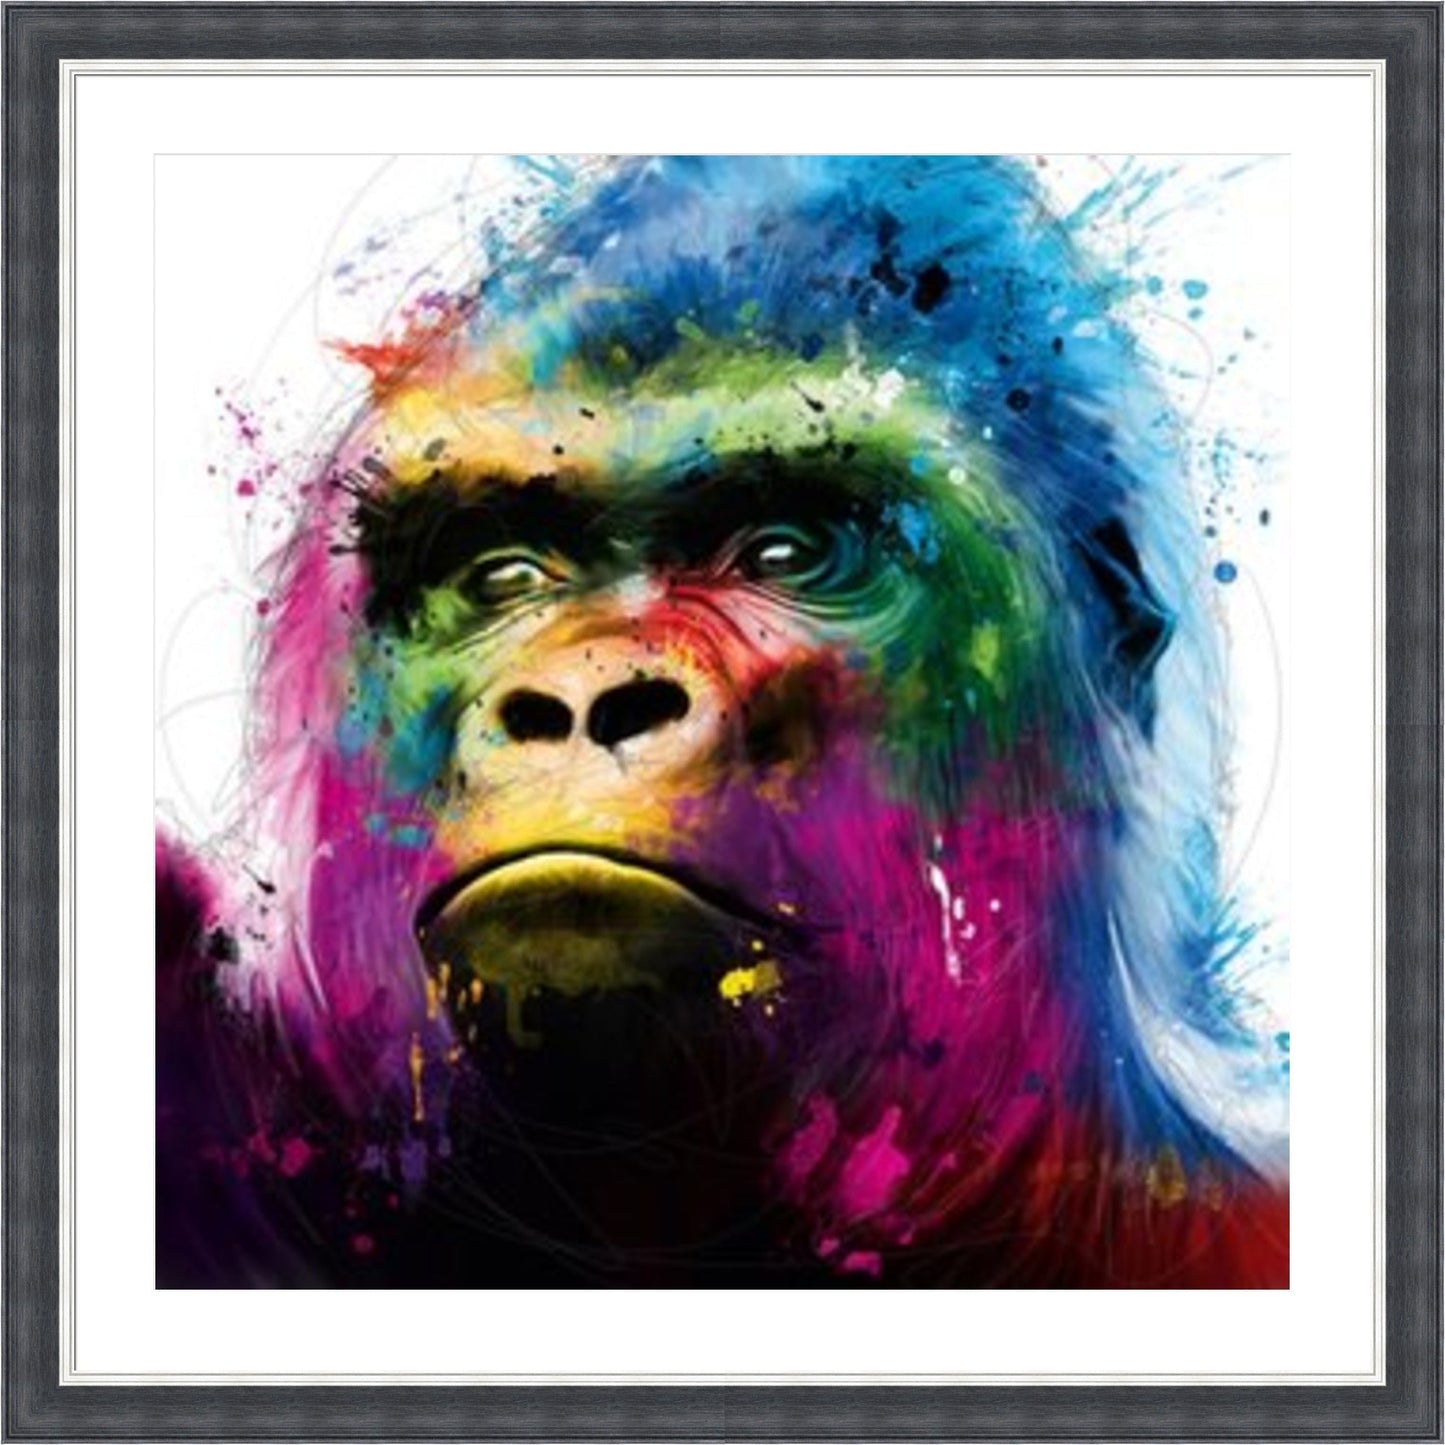 Gorilla by Patrice Murciano